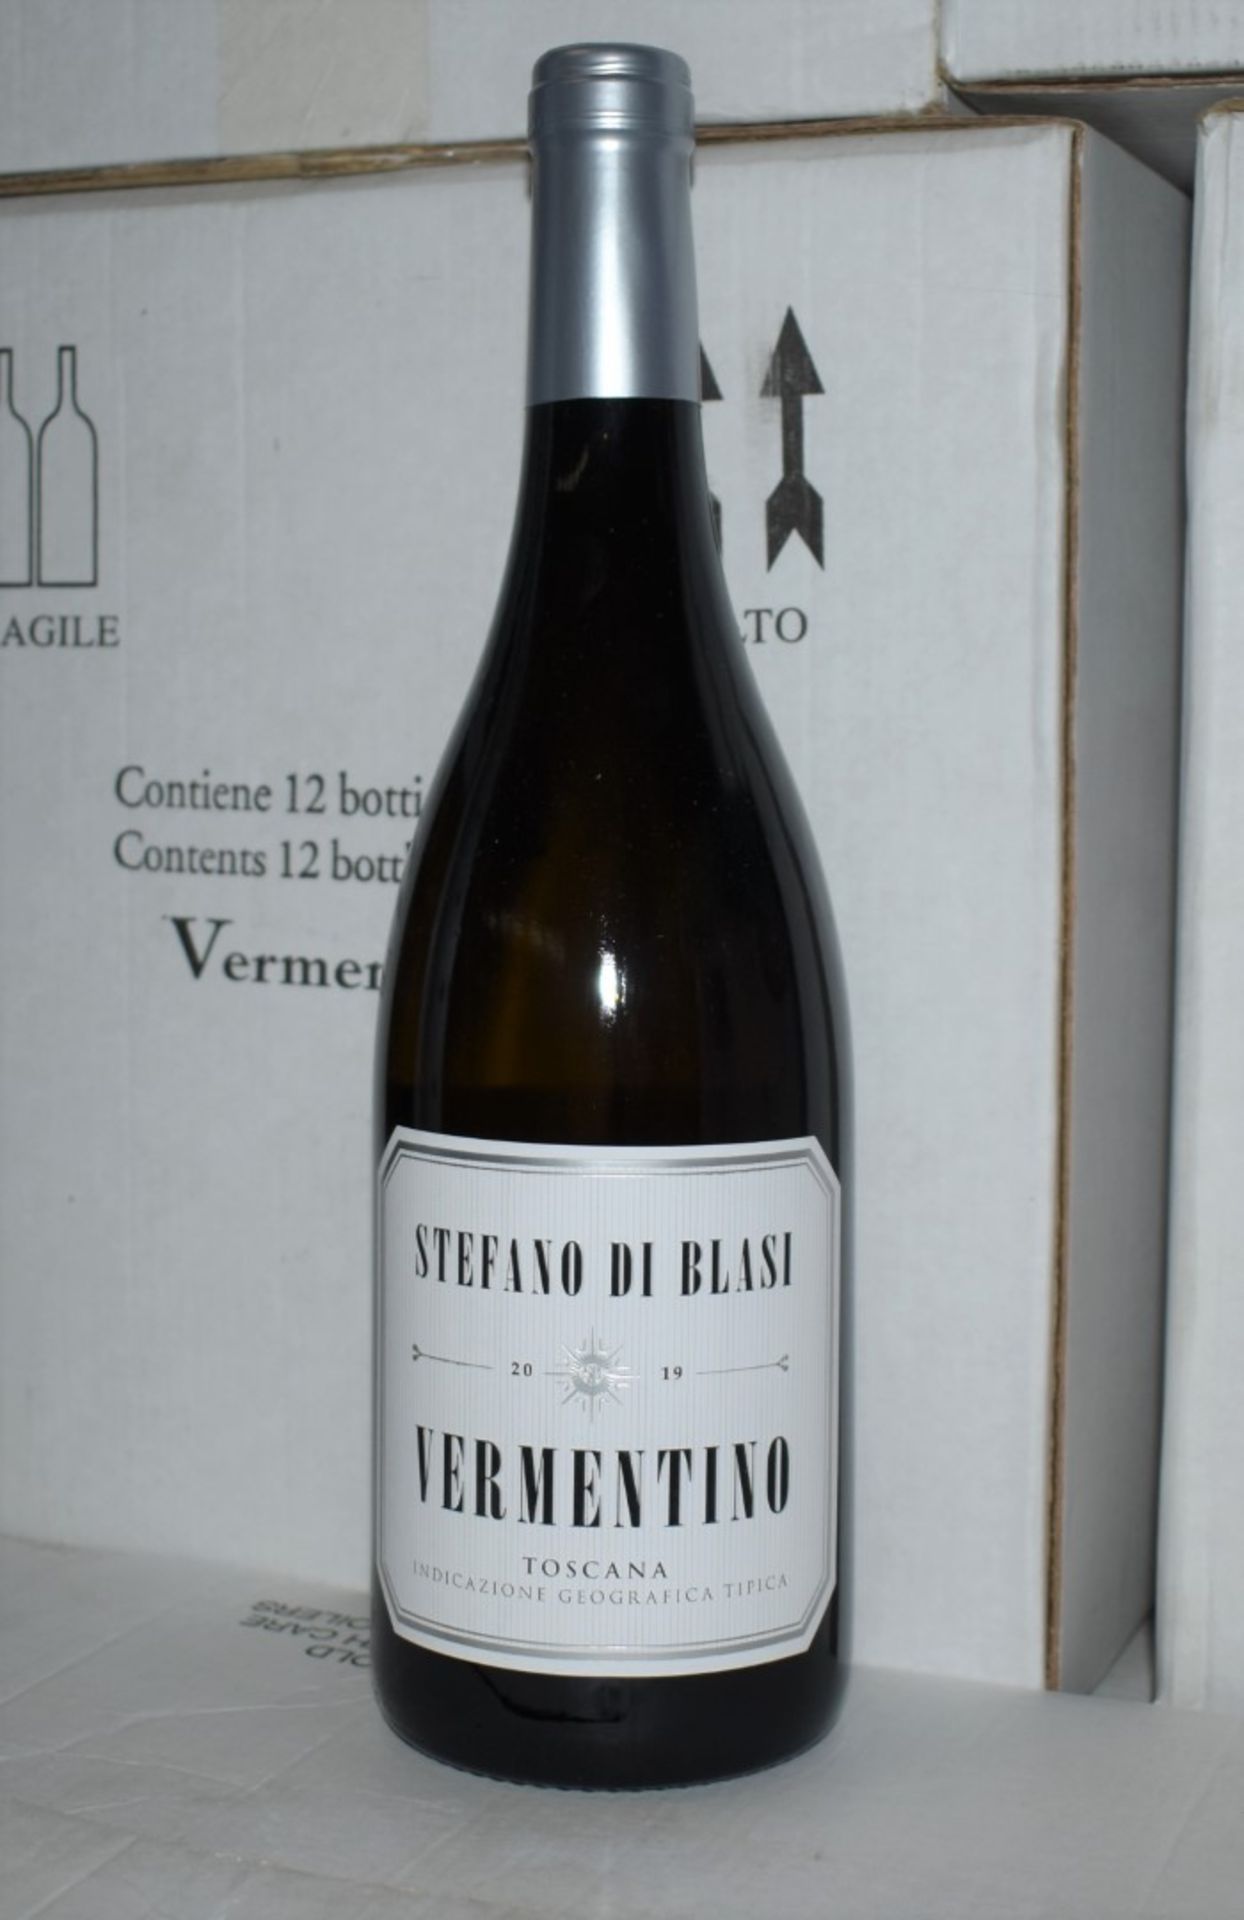 12 x Bottles of Stefano Di Blasi 2019 Vermentino Toscana 13.5% Wine - 750ml Bottles - Drink Until - Image 6 of 7